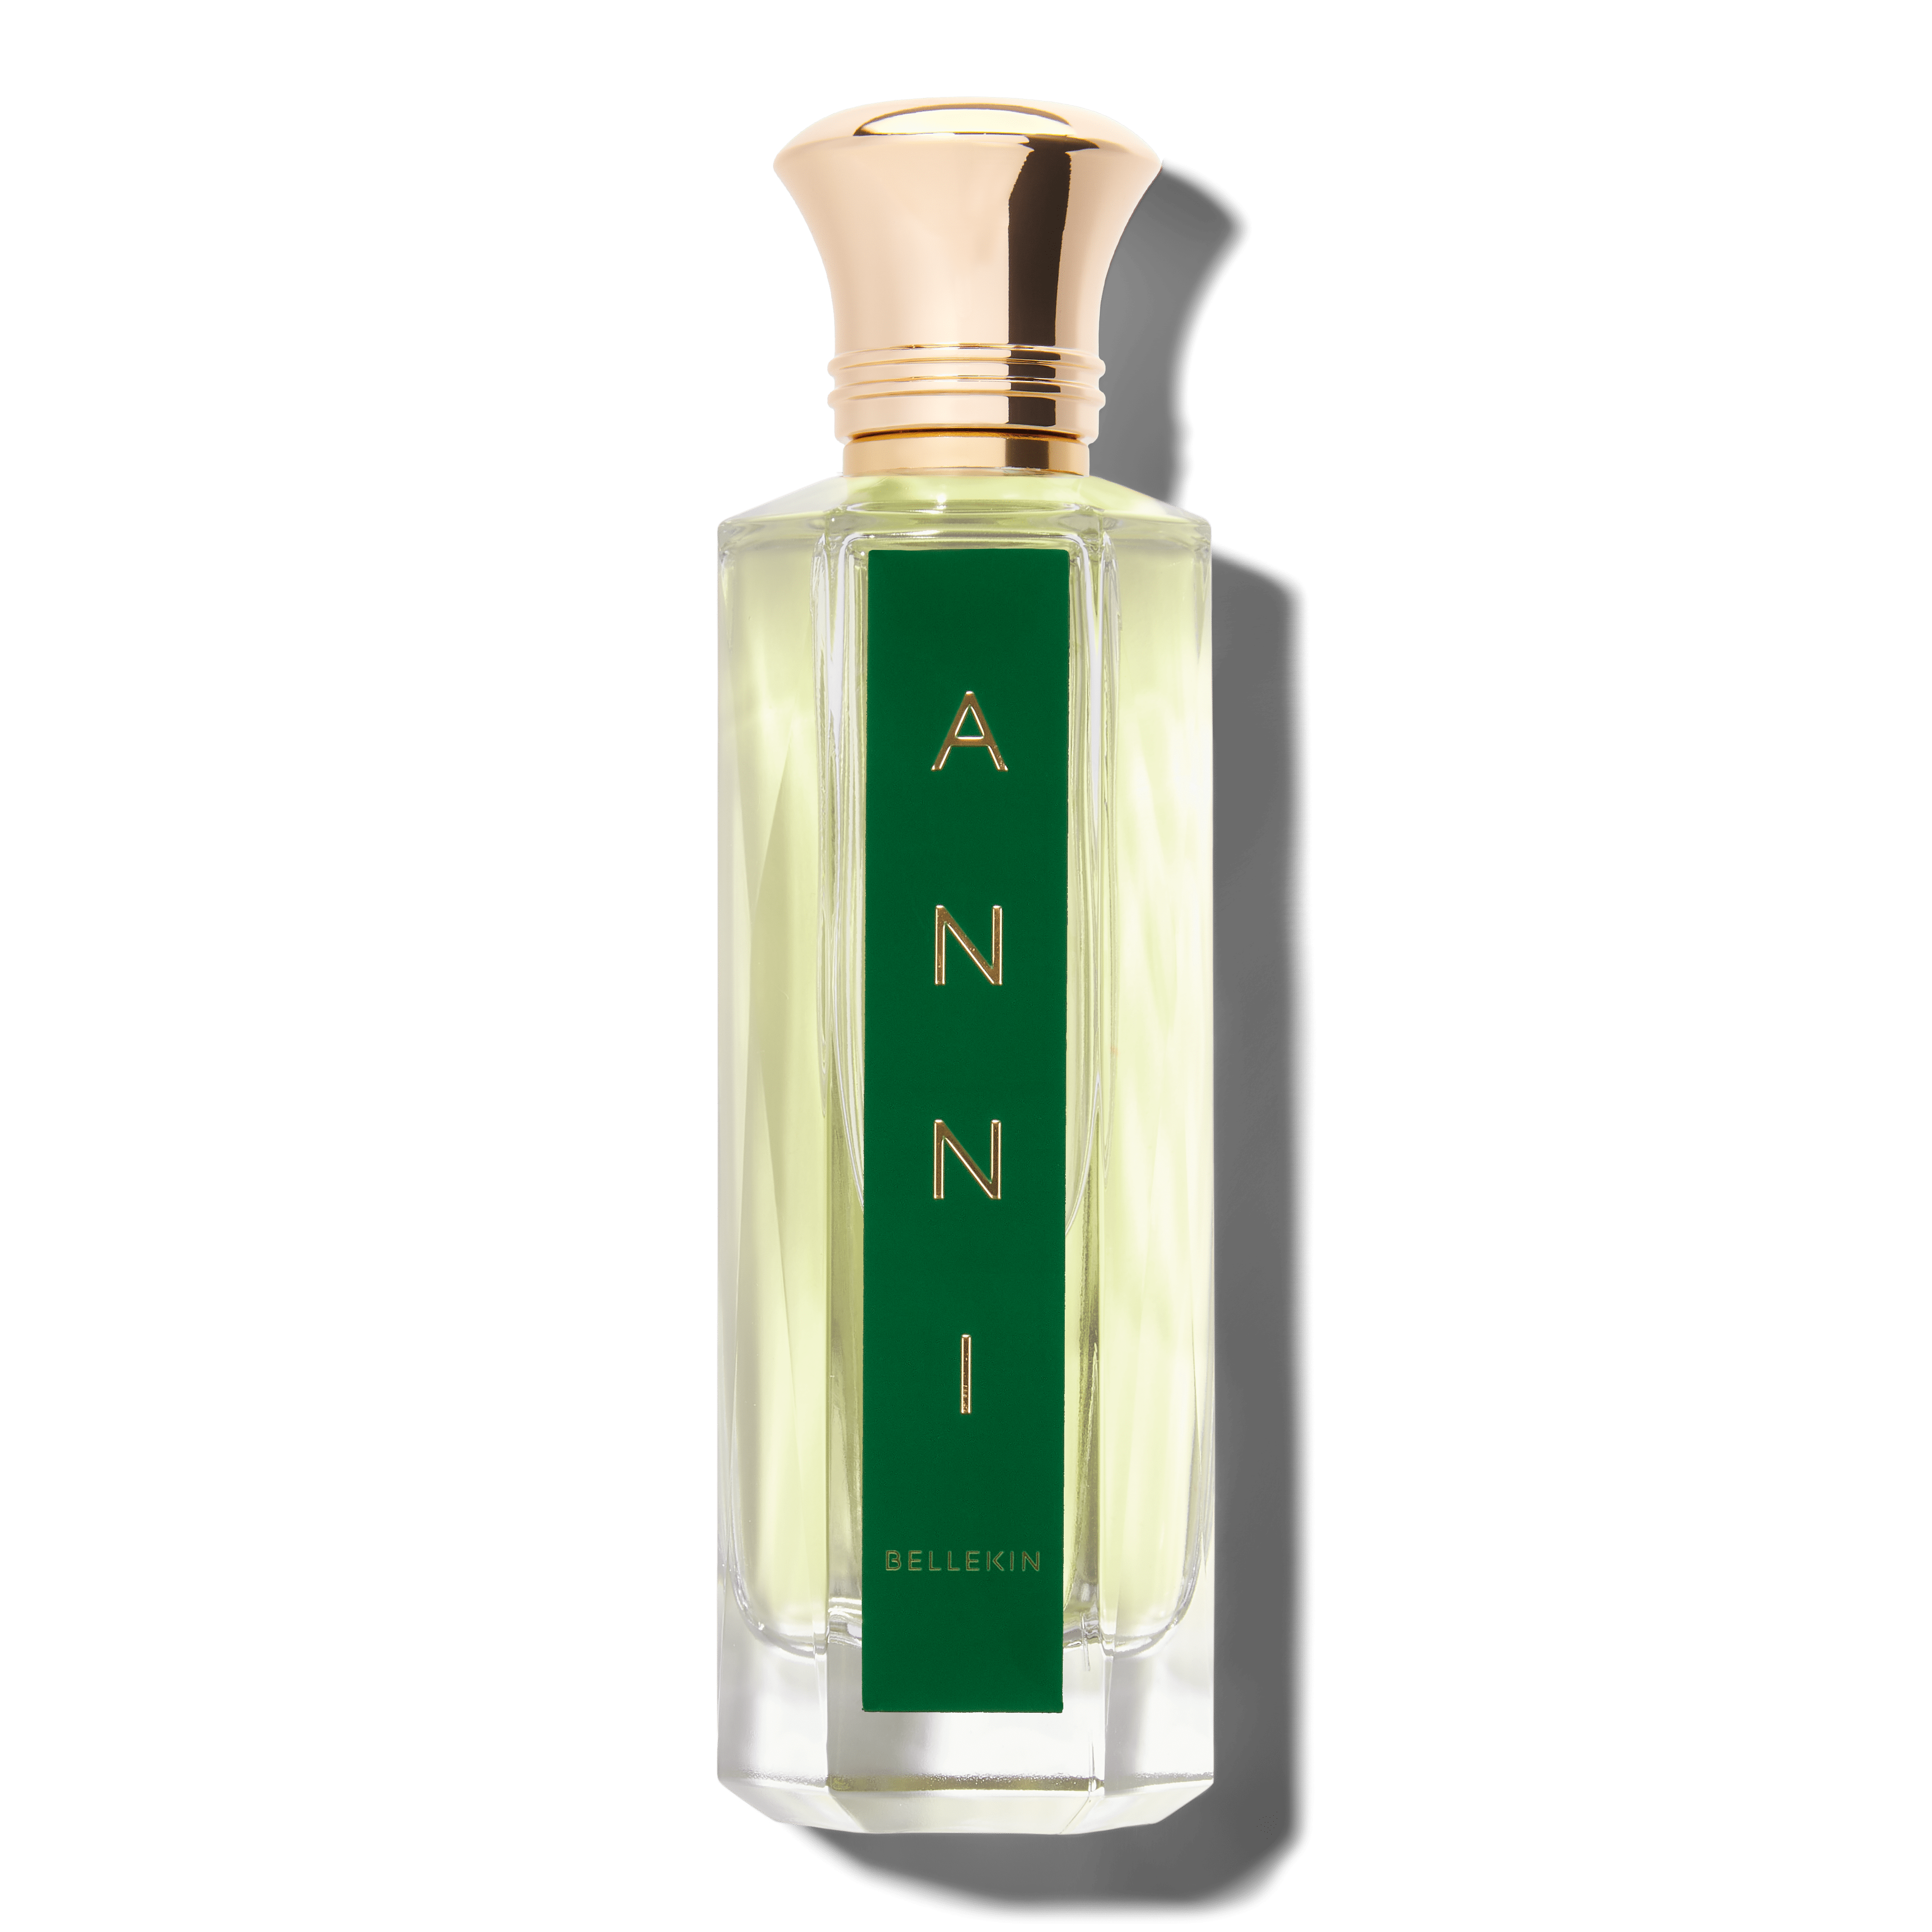 Bellekin.com Perfume ANNI